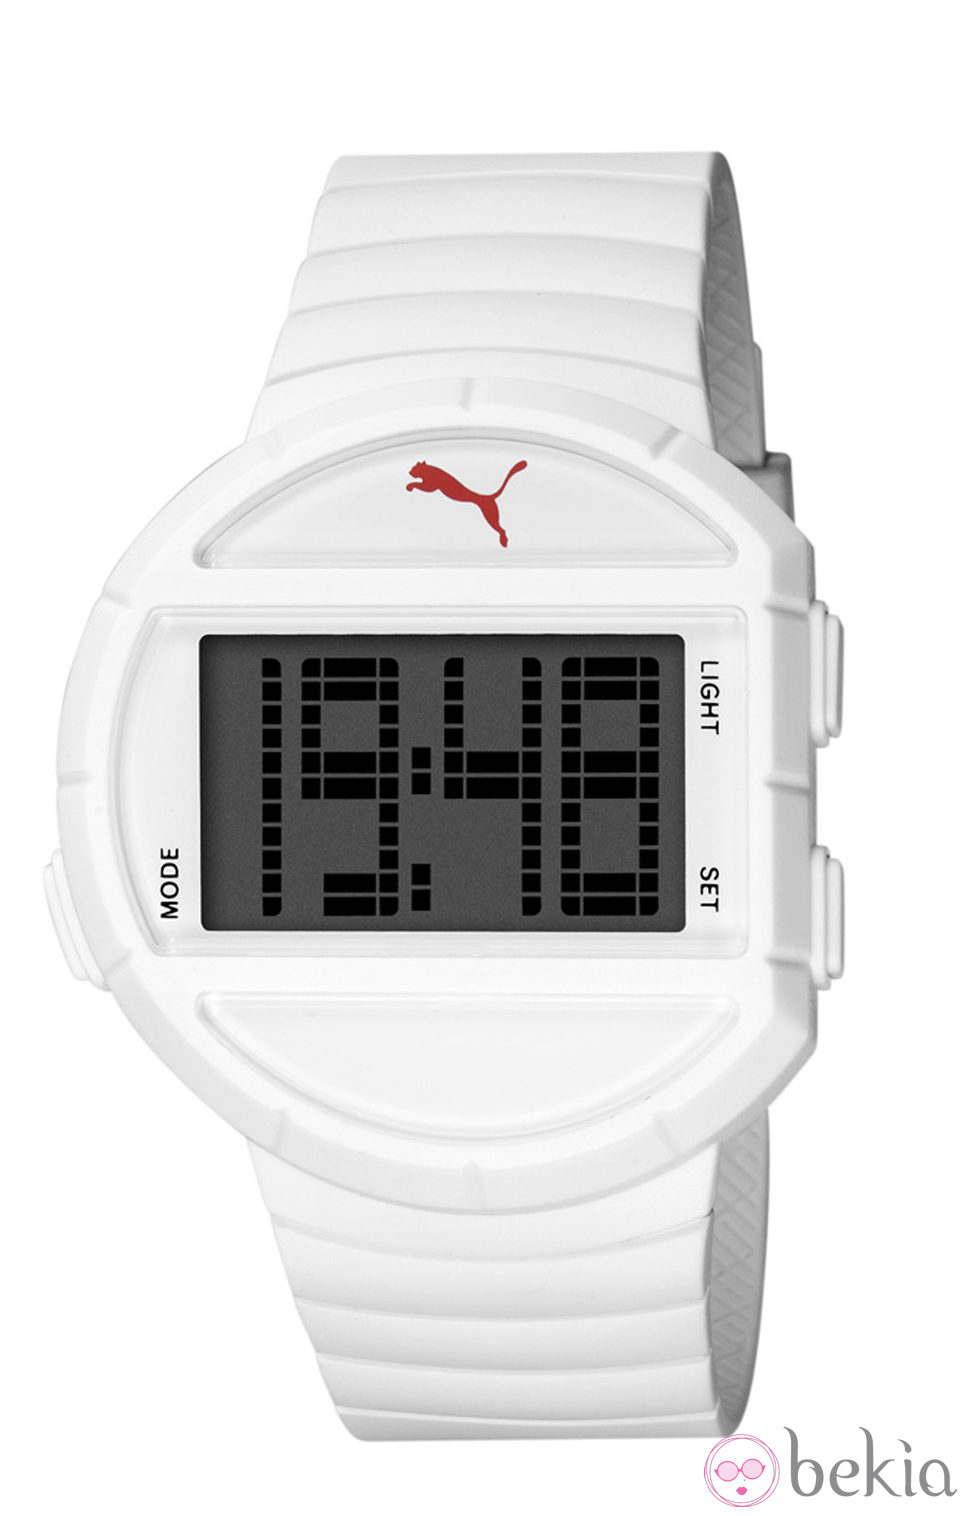 Reloj deportivo 'Half Time' de la firma Puma en color blanco